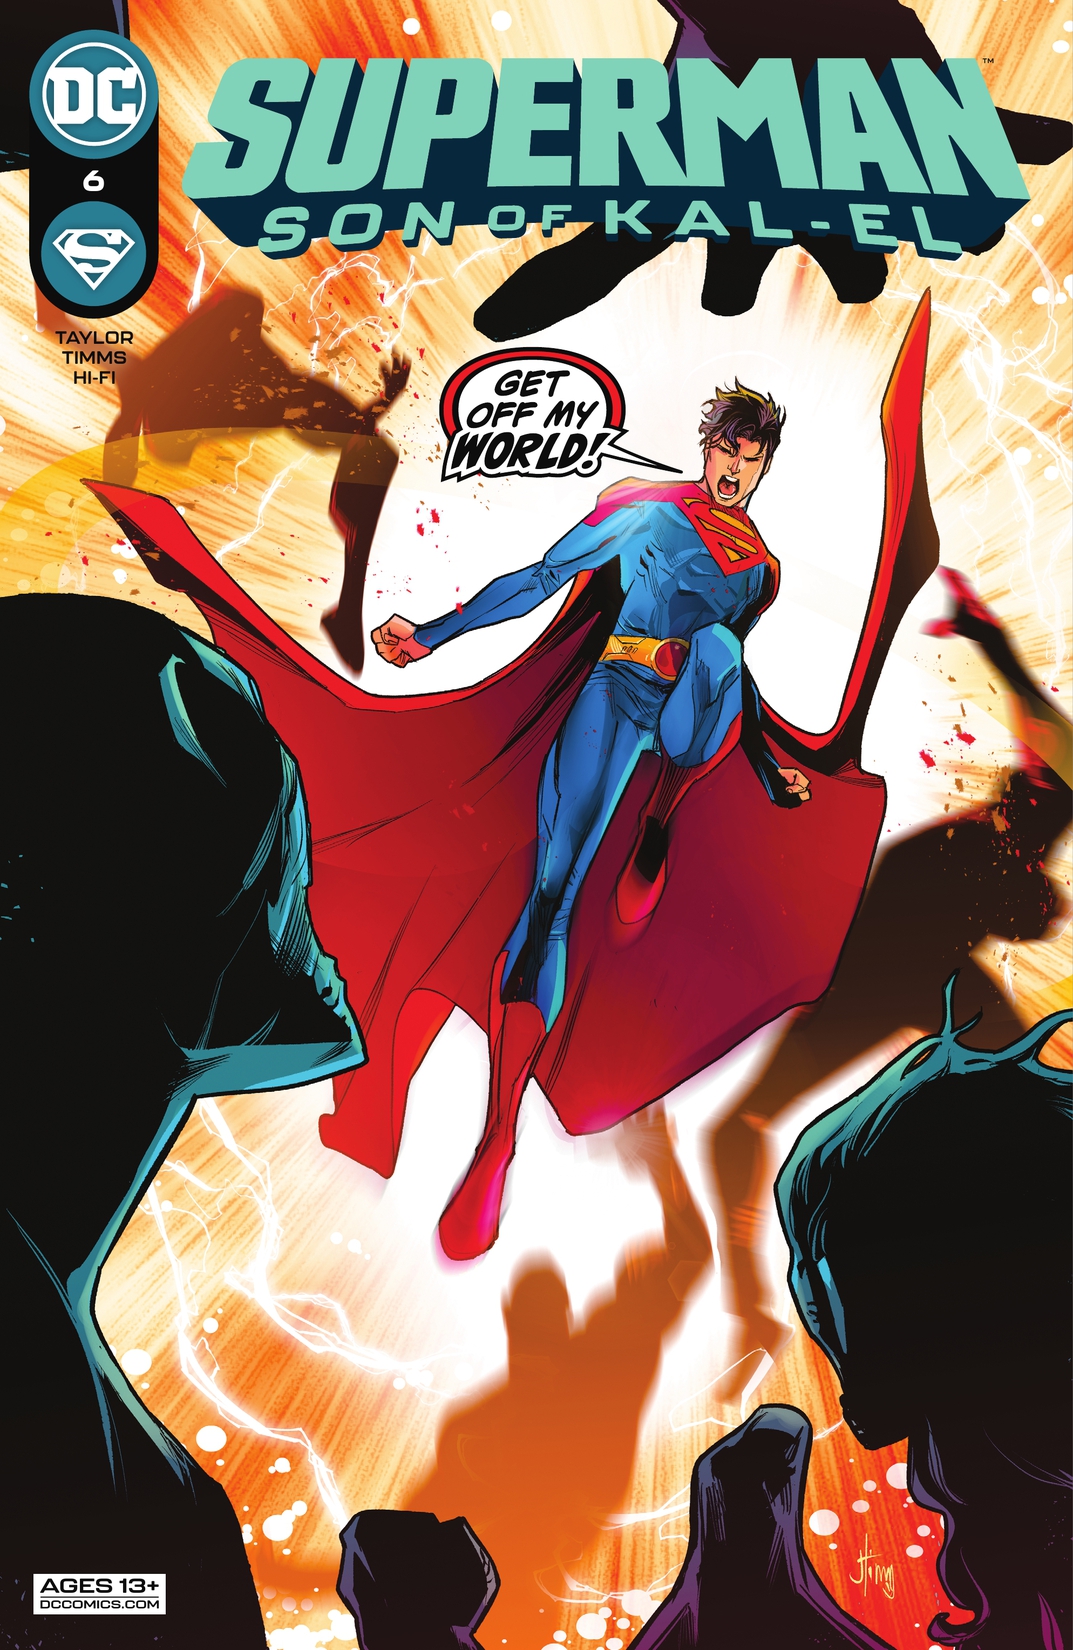 Superman: Son of Kal-El #6 preview images